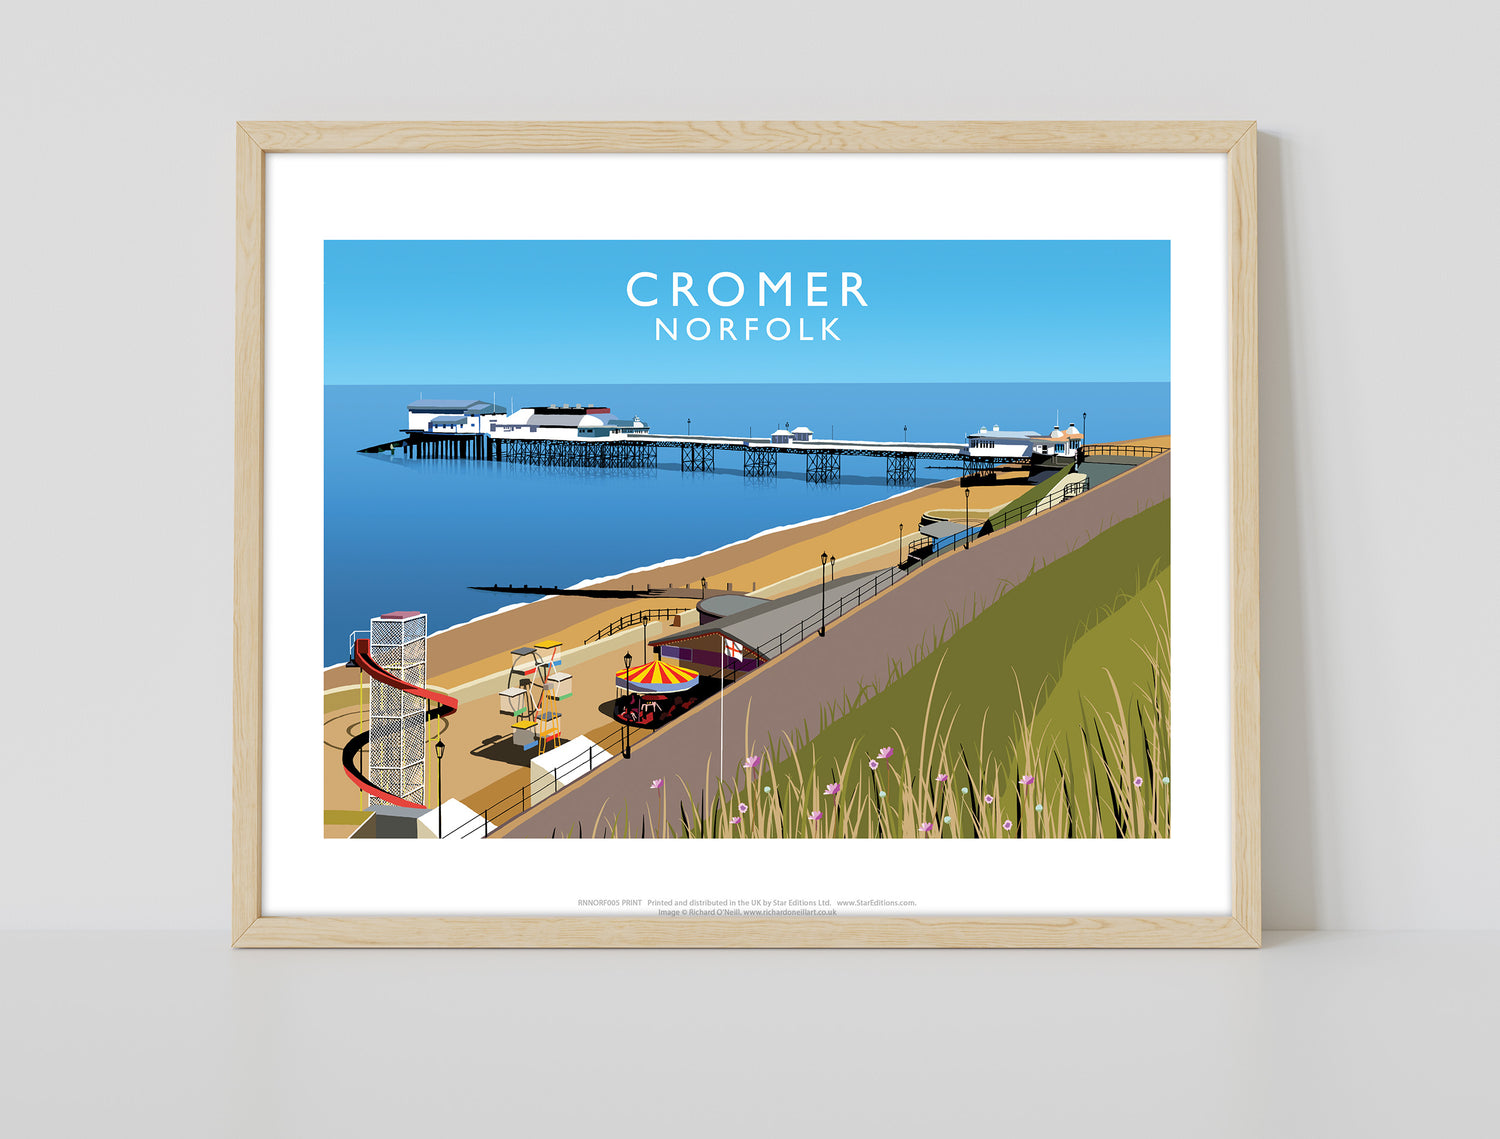 Cromer, Norfolk - Art Print